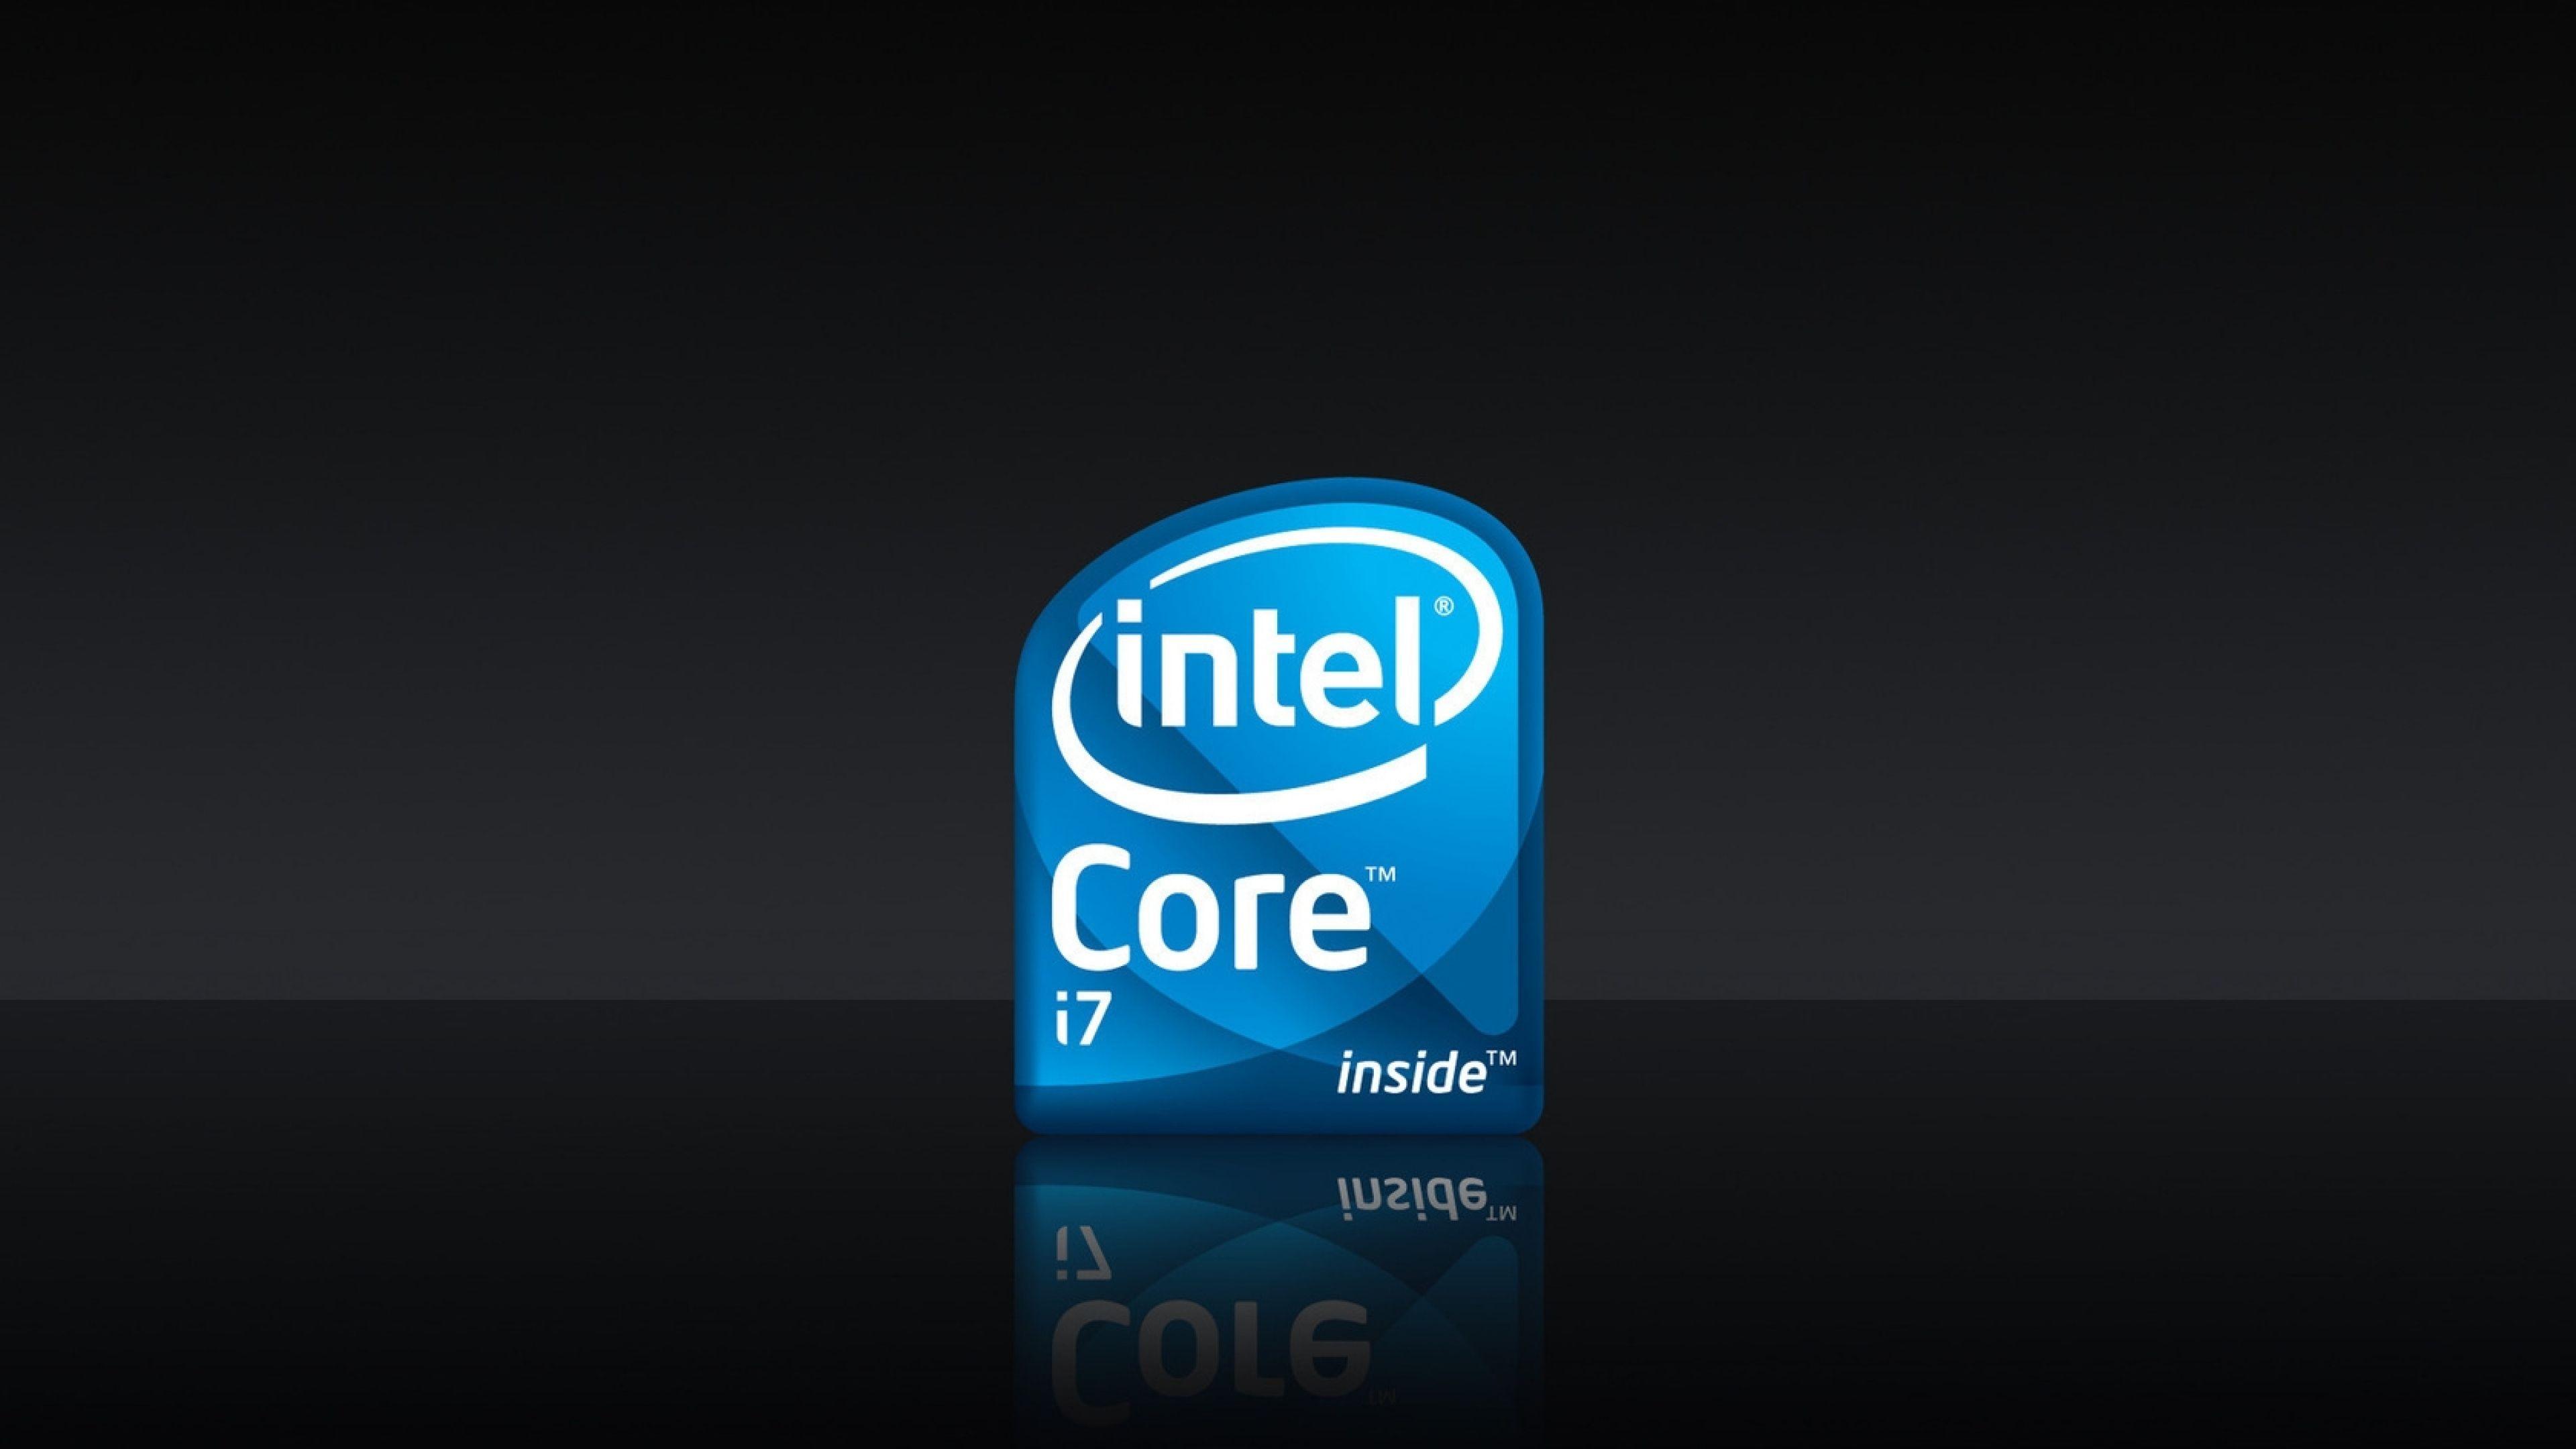 Intel 4k Desktop Wallpapers Top Free Intel 4k Desktop Backgrounds Wallpaperaccess